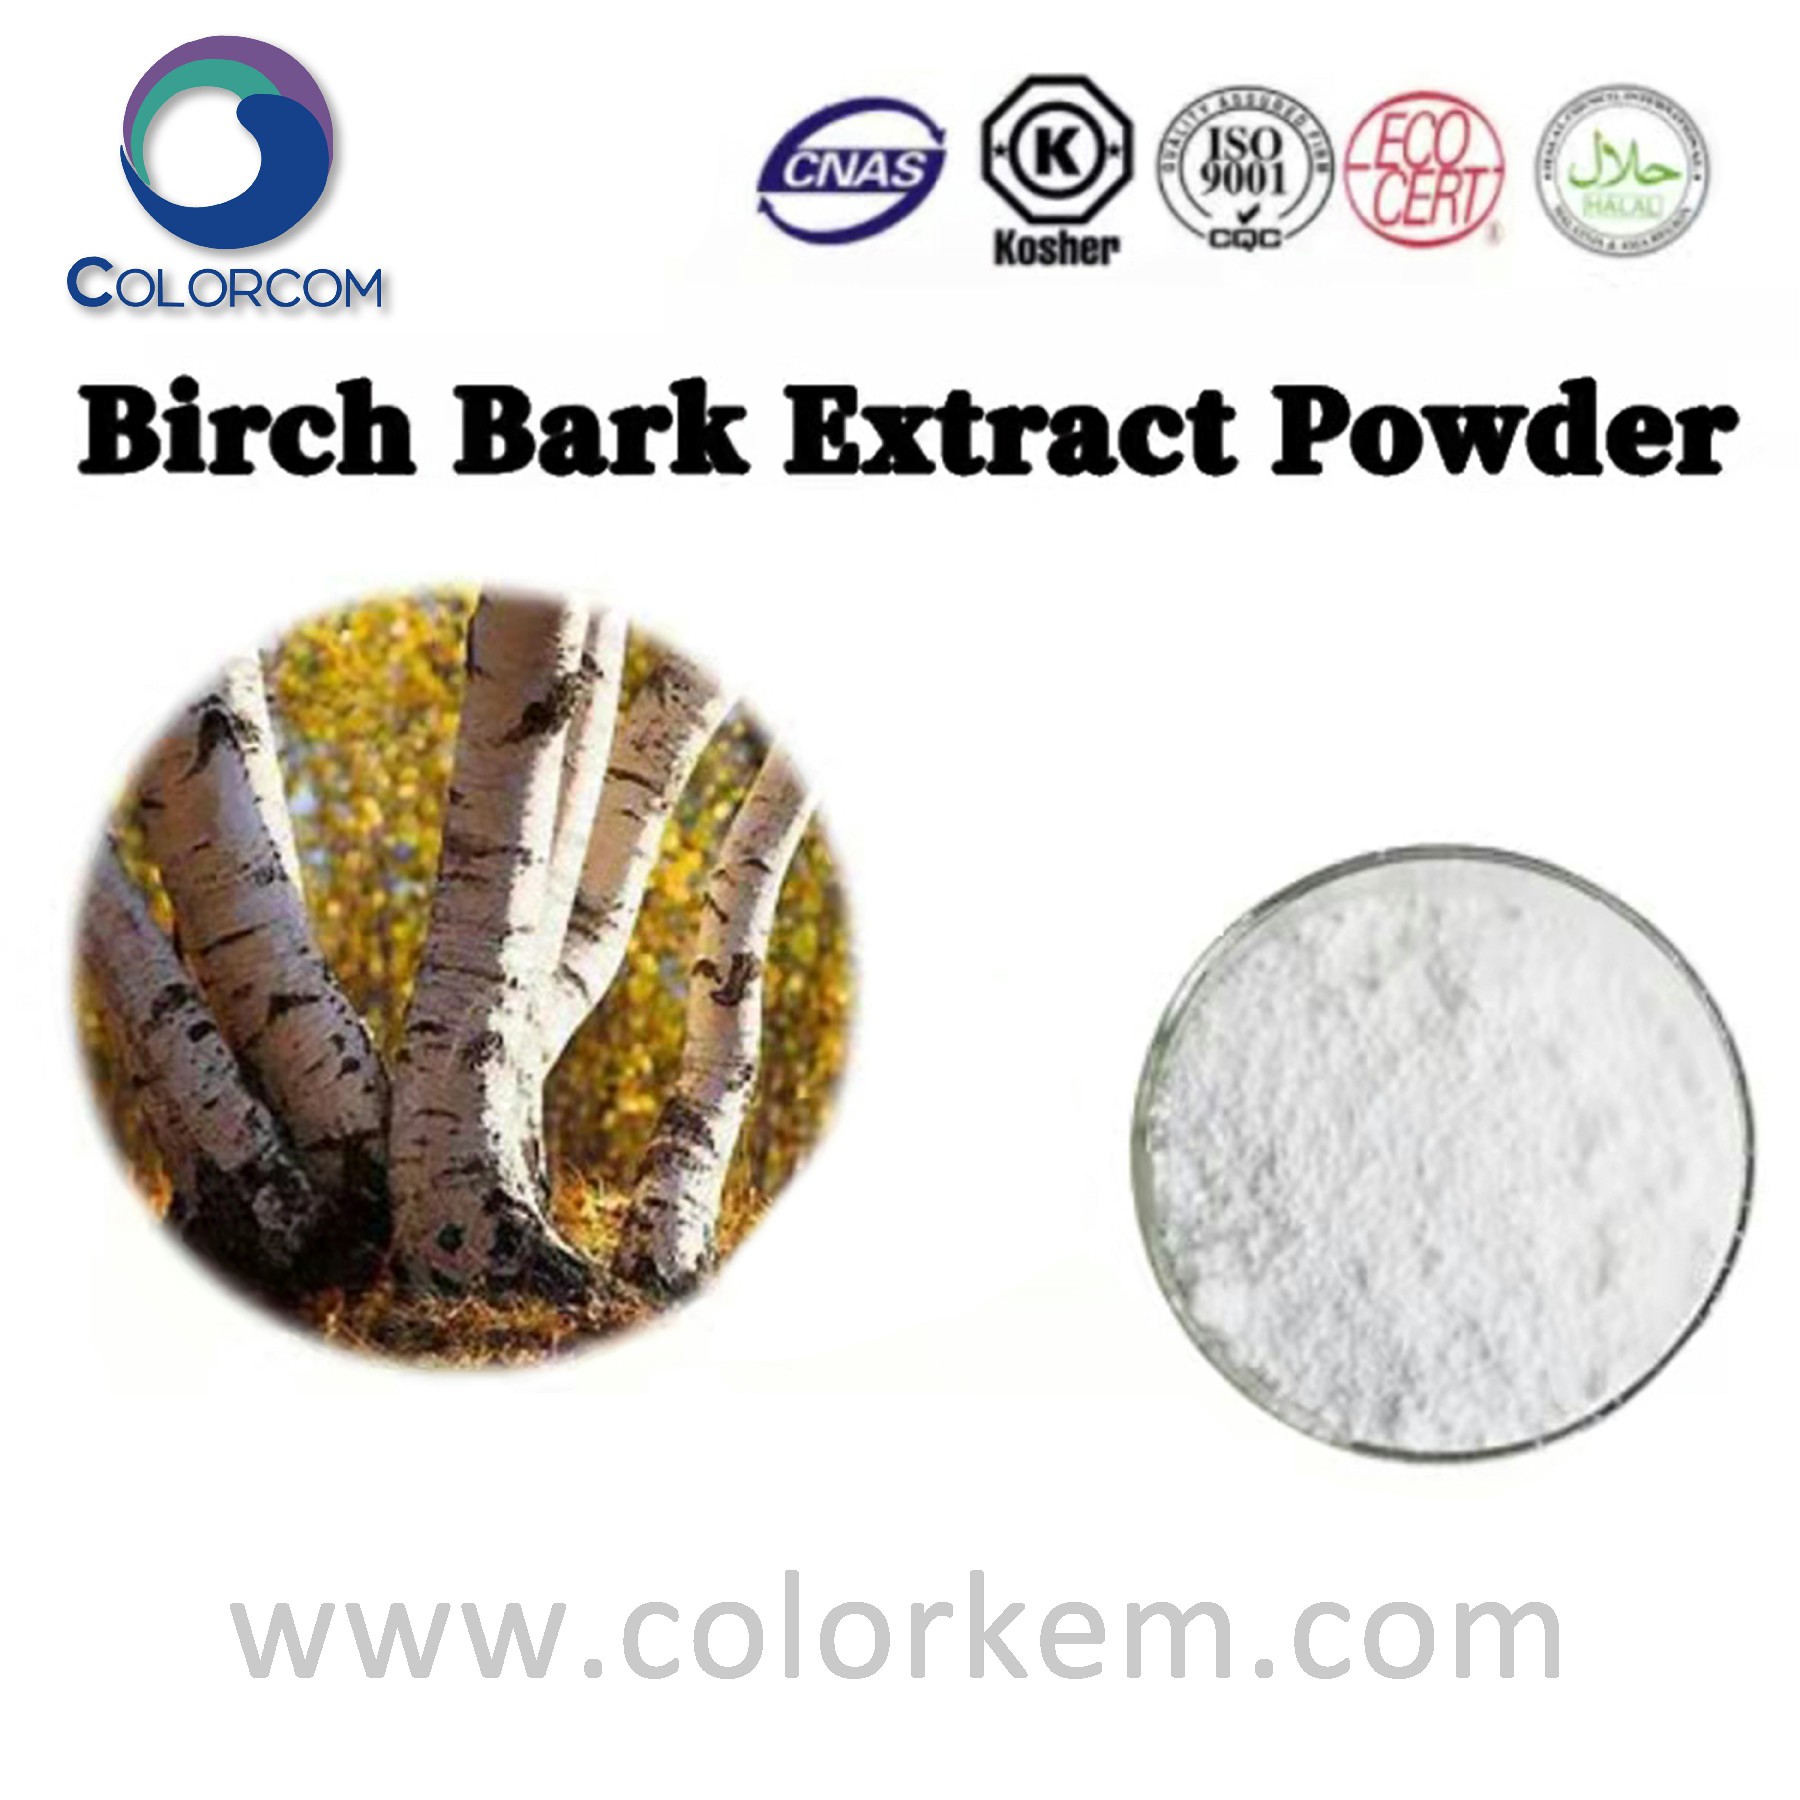 Birch Bark Extract Powder